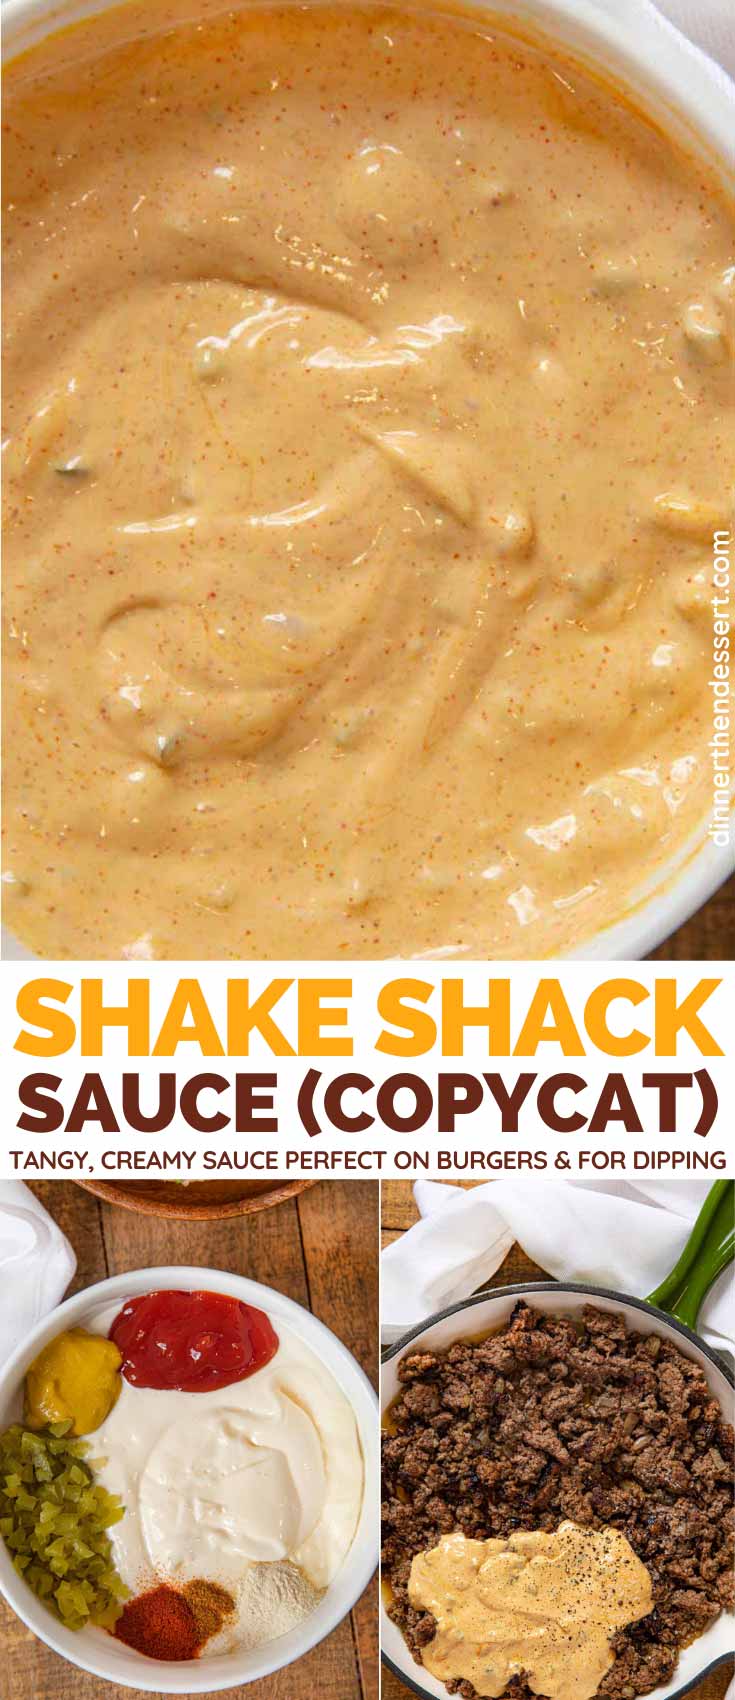 Copycat Shake Shack Burger - How To Make Shake Shack's Burger